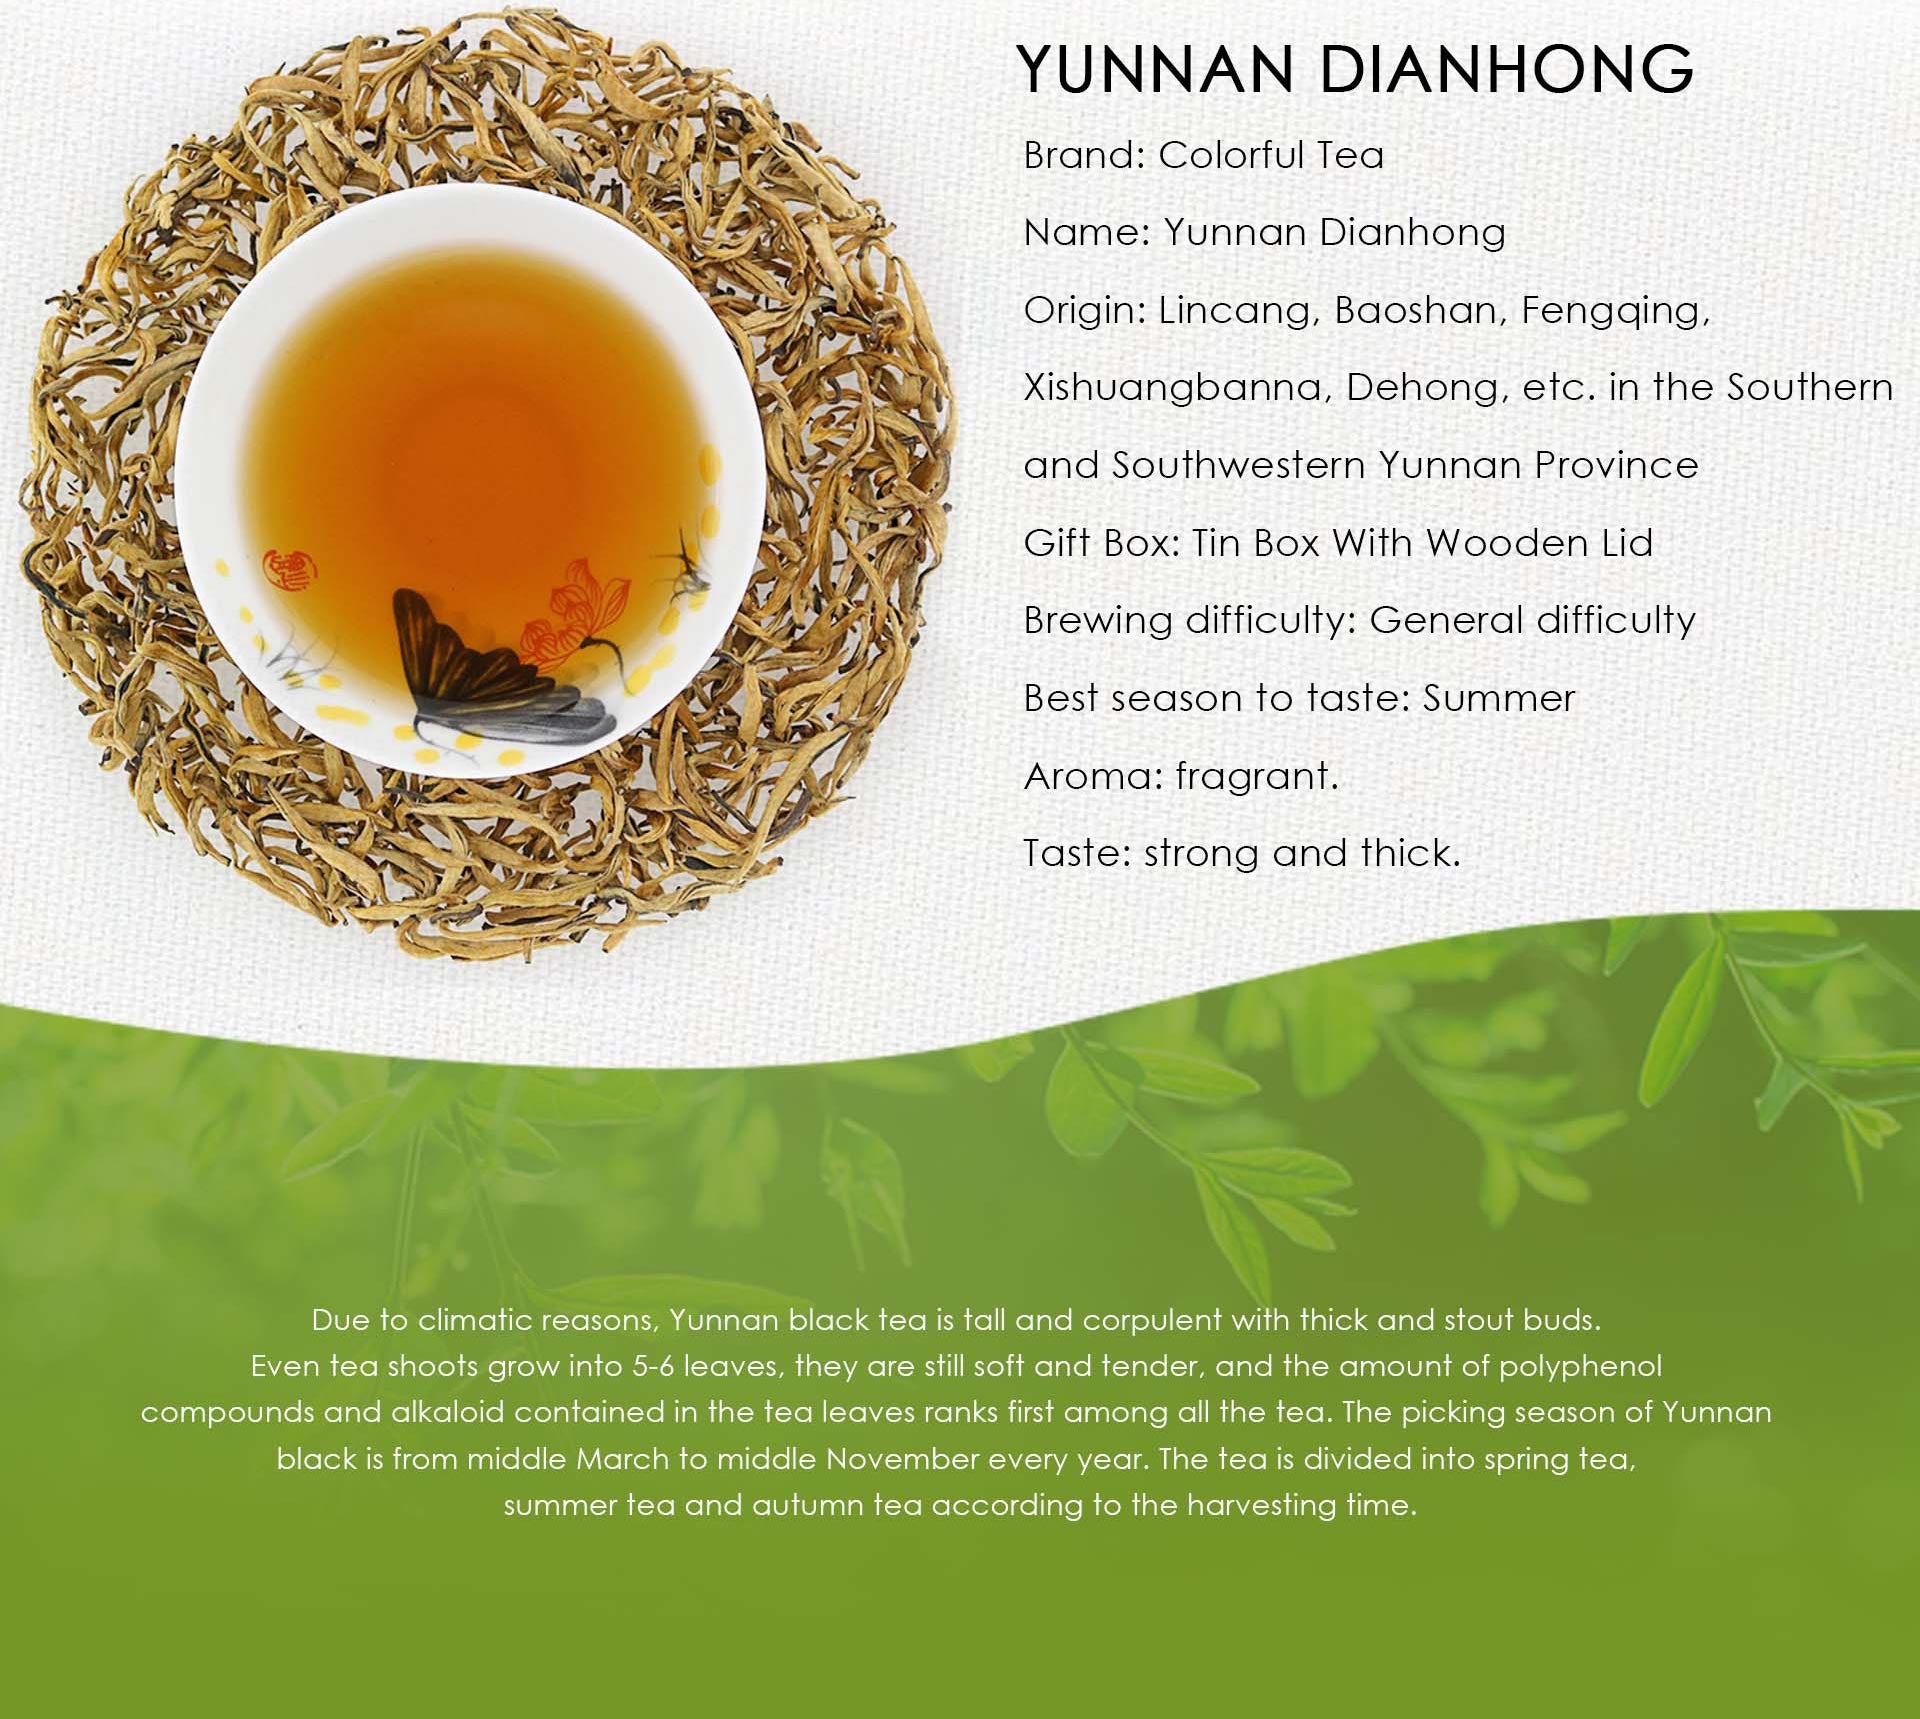 Yunnan Dianhong Black Tea